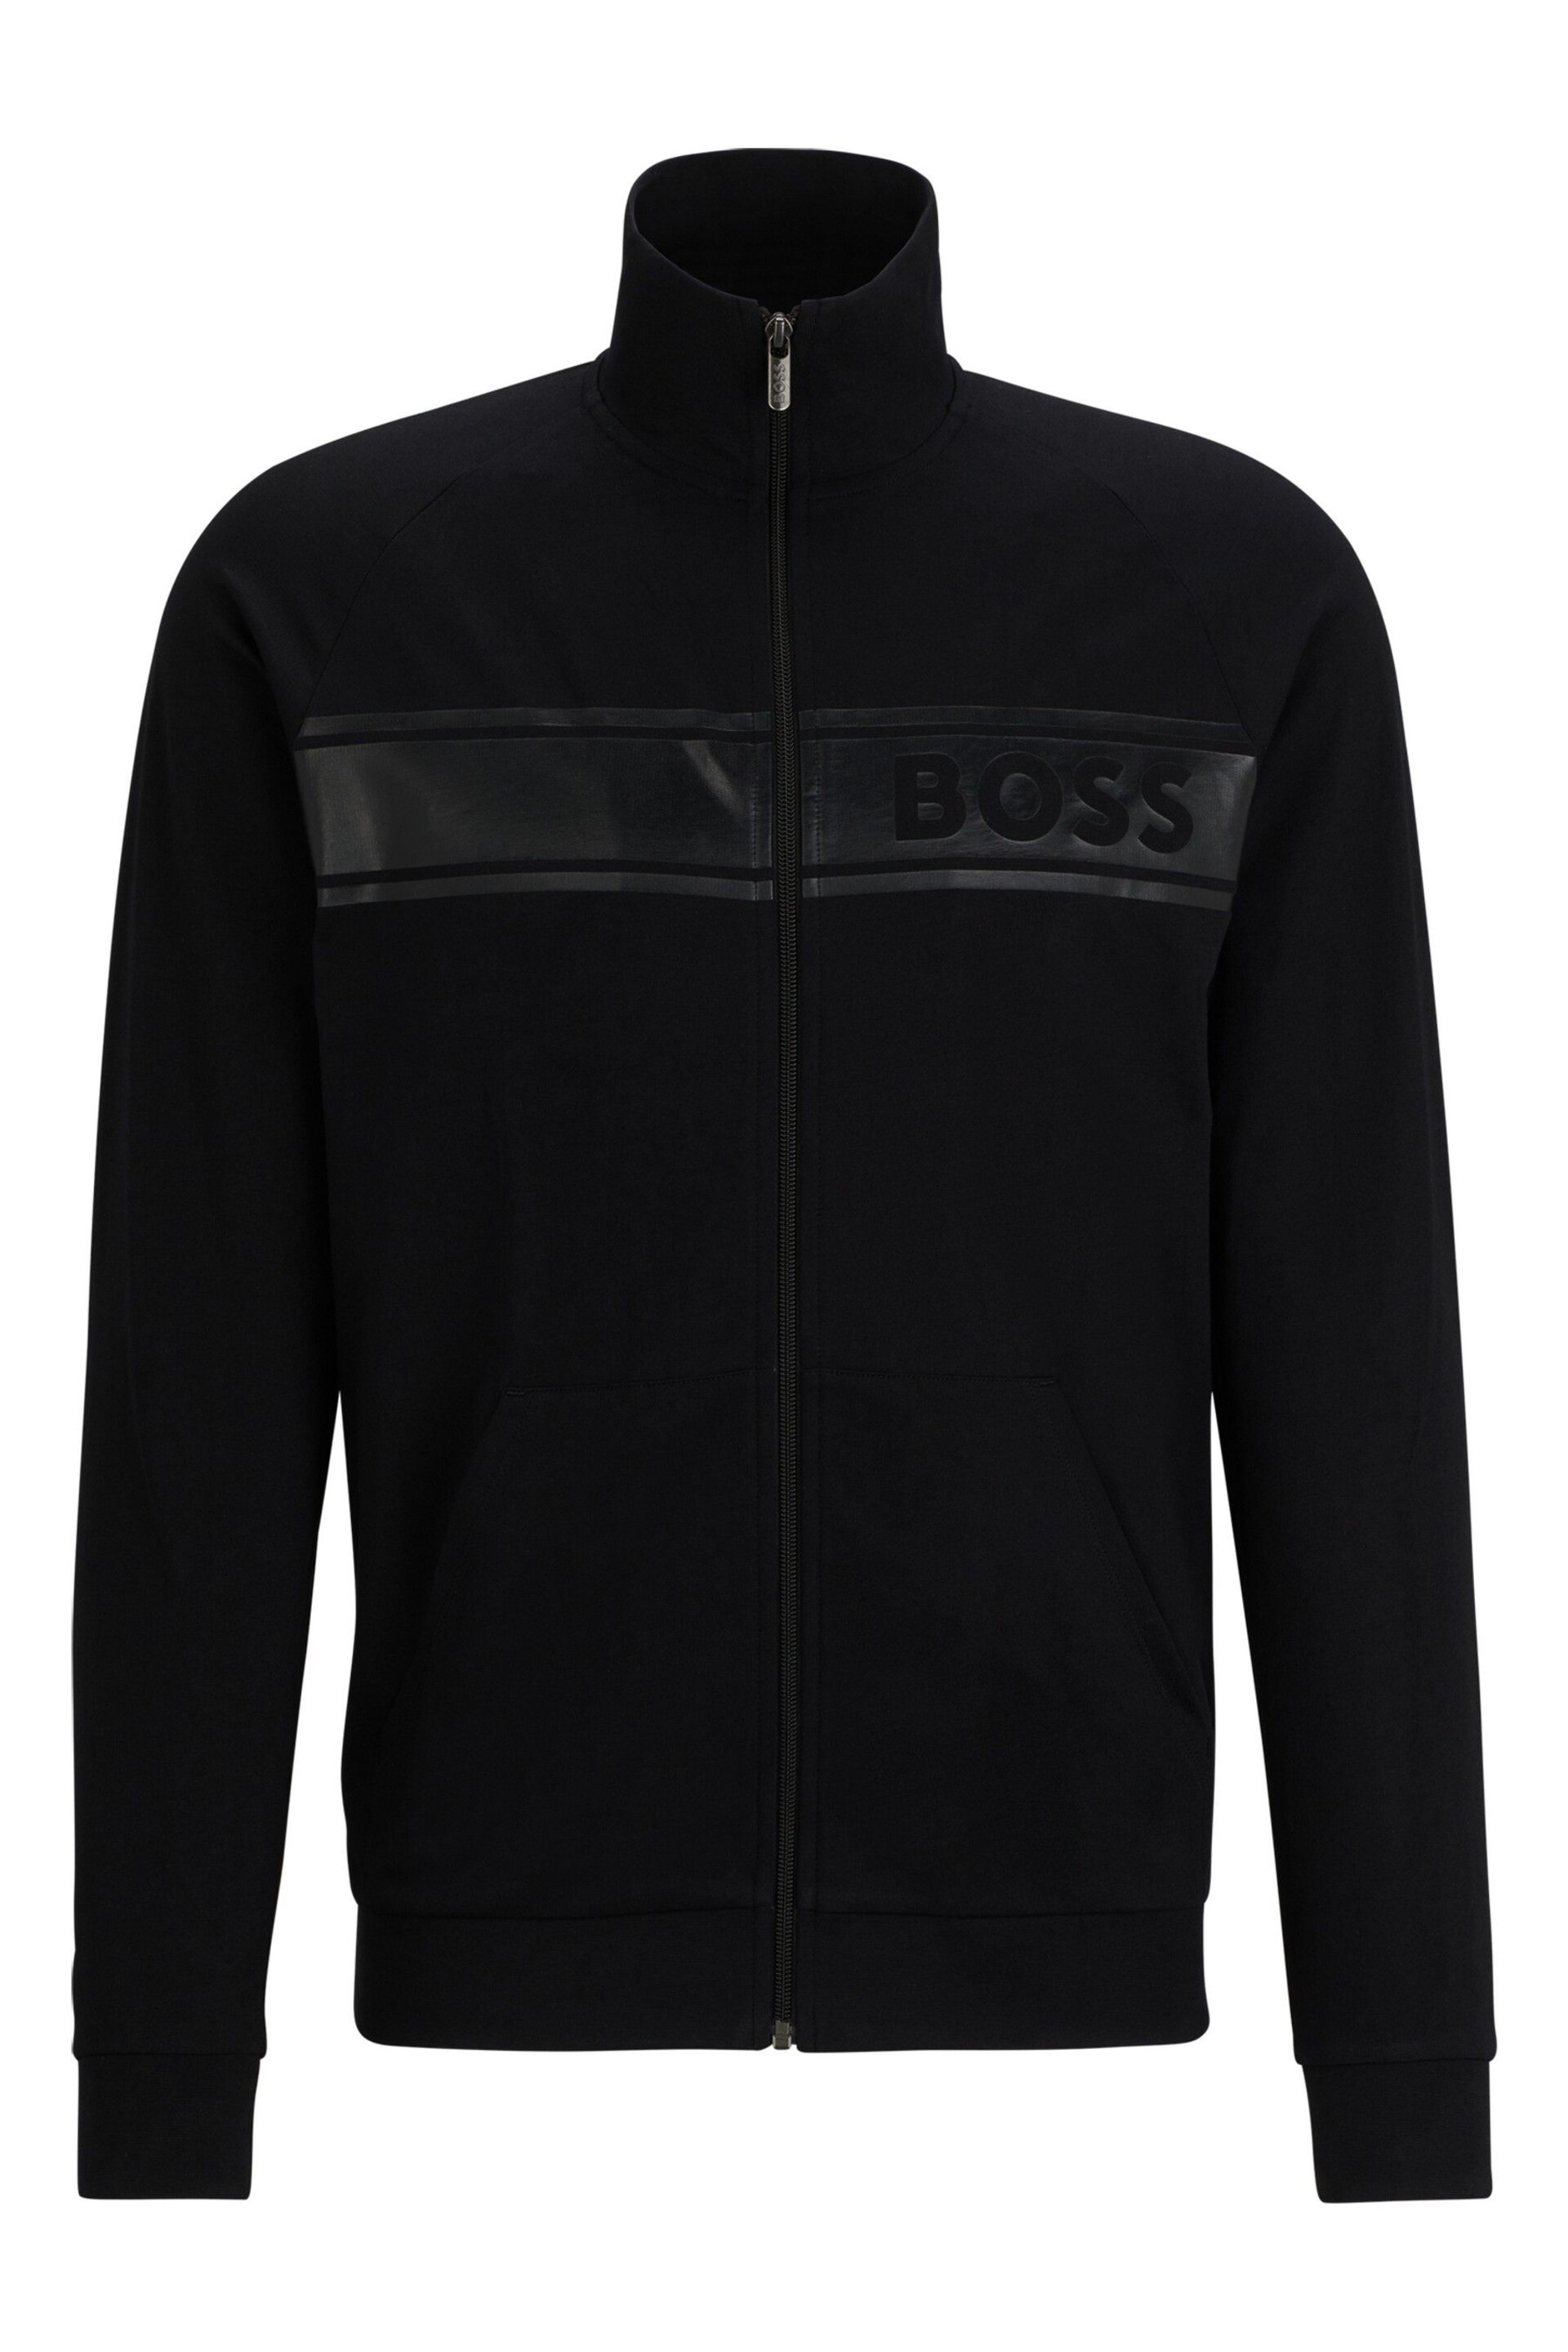 BOSS Black Tonal Logo Zip Up Sweatshirt - Image 5 of 5